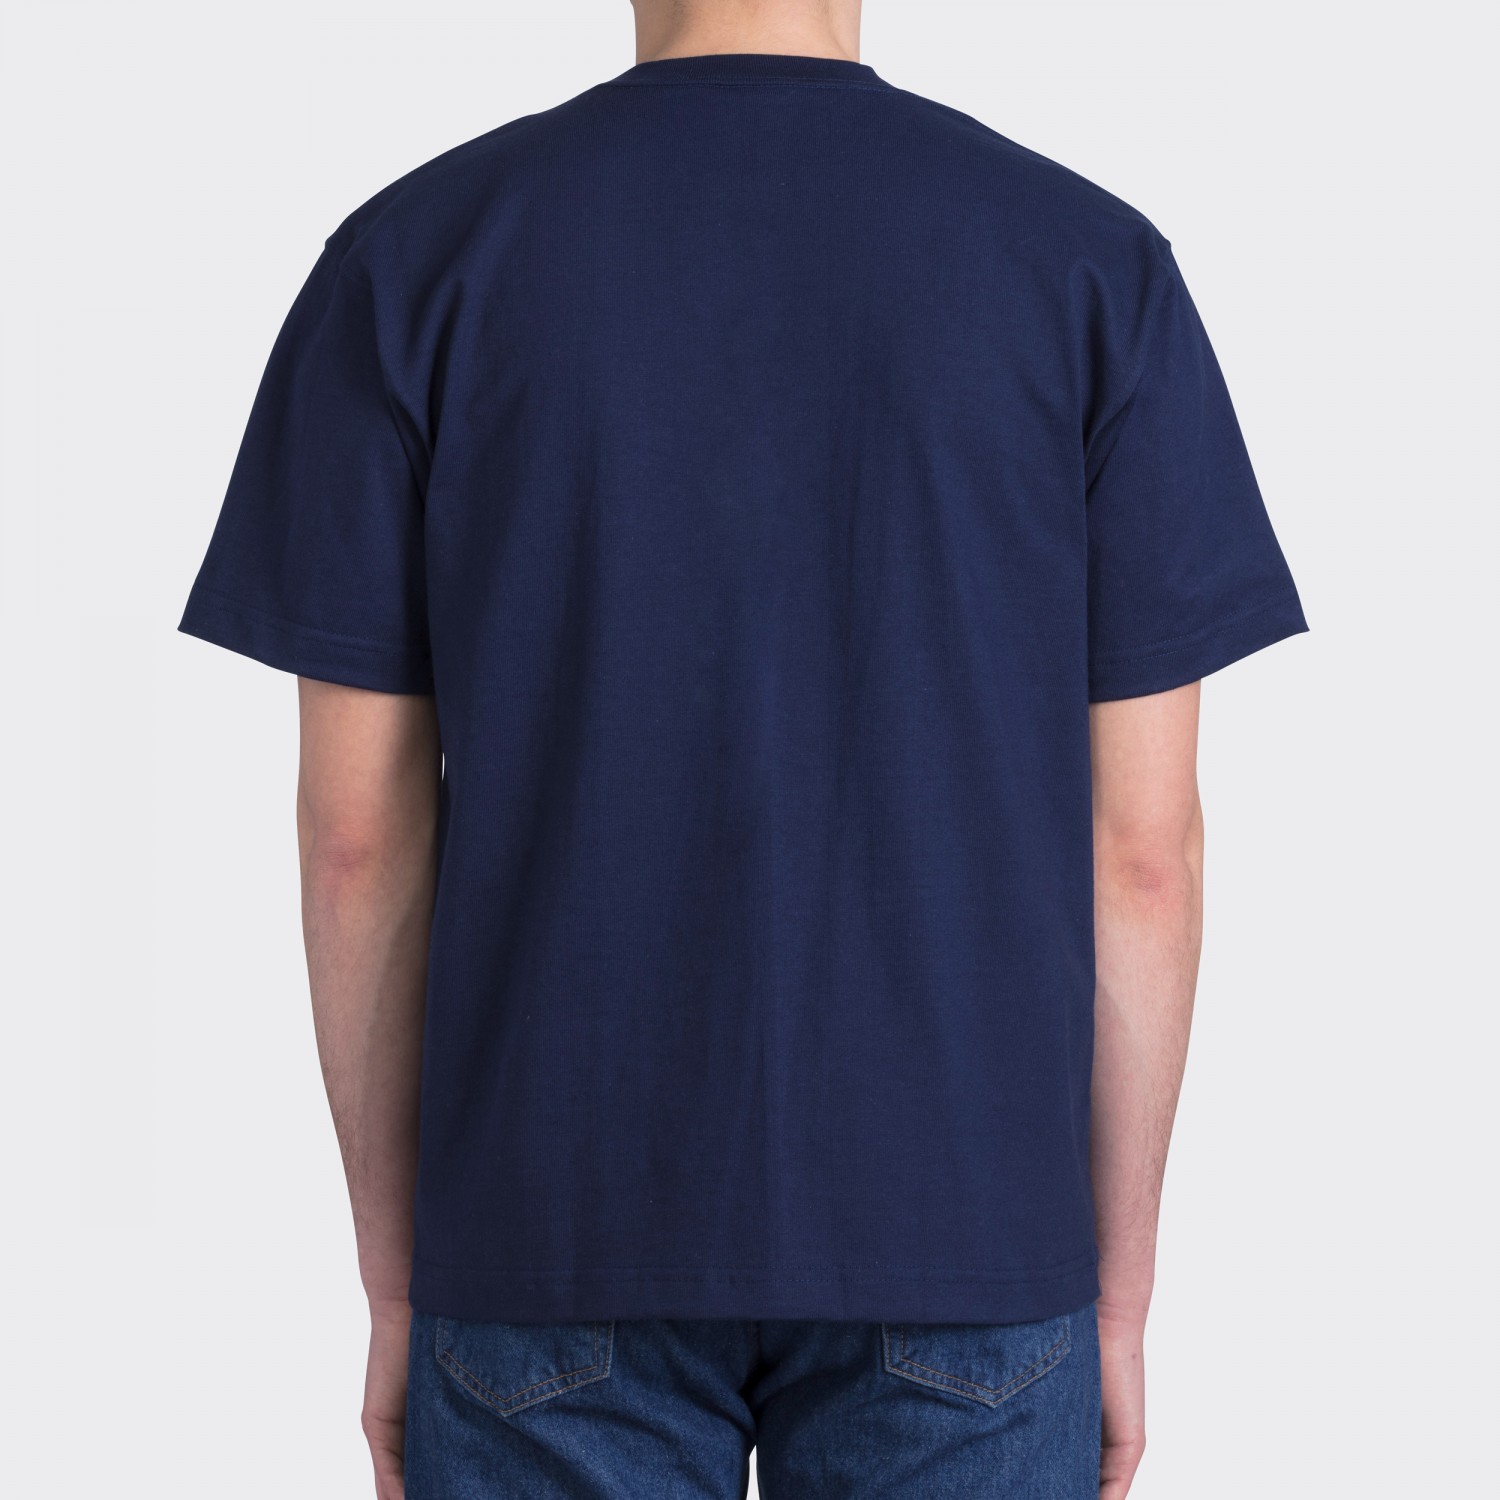 : T-shirt Camber Navy : Pocket USA